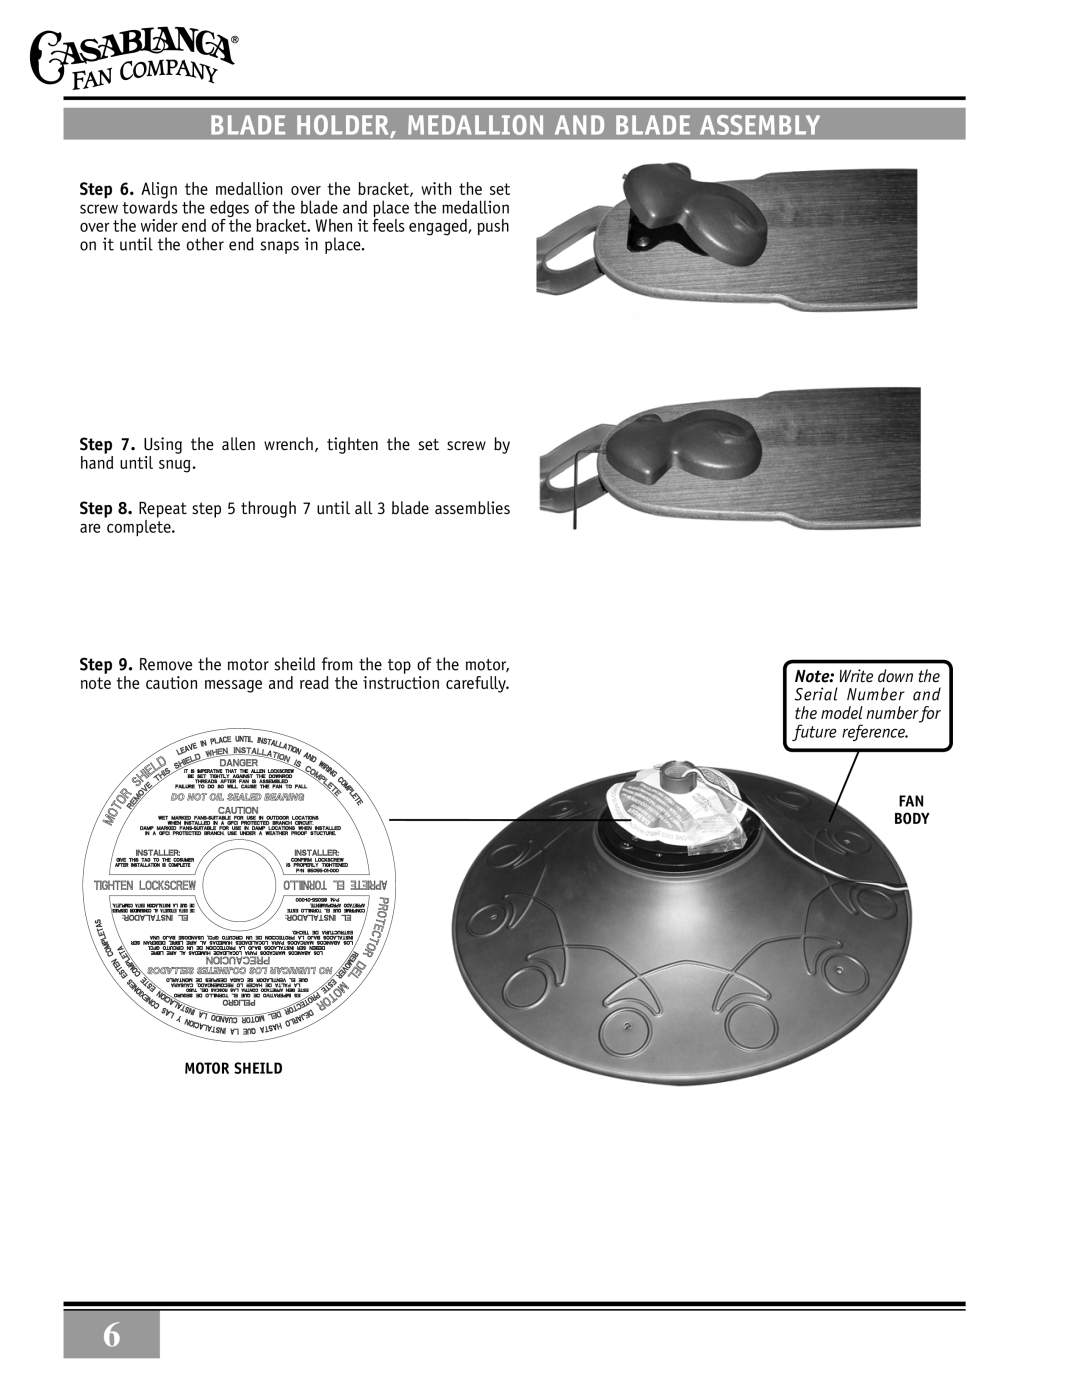 Casablanca Fan Company 89UXXM warranty blade holder, medallion and blade assembly, FAN BODY Motor sheild 